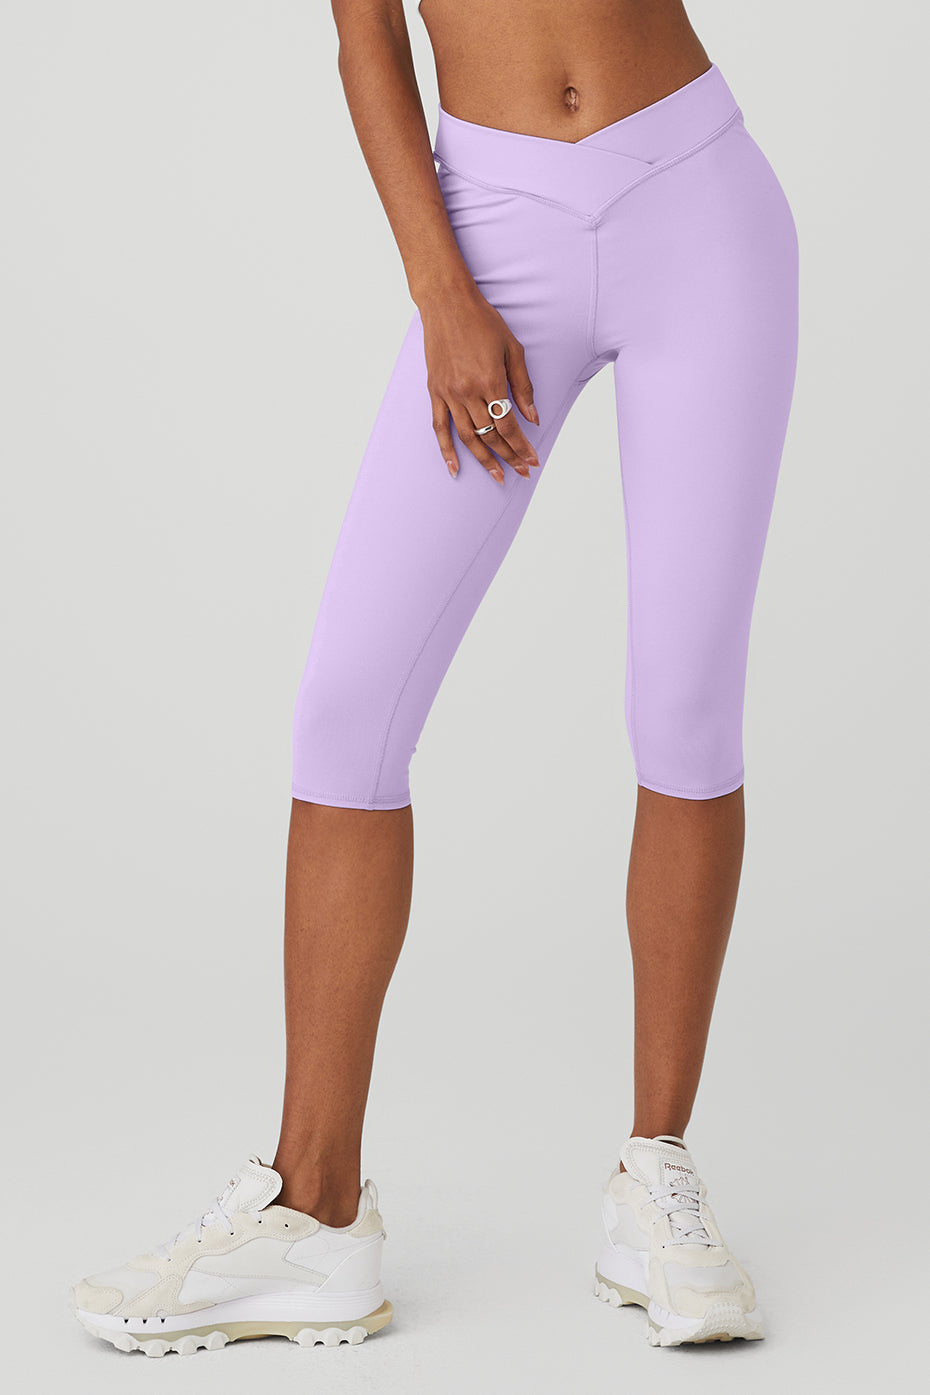 ALO Yoga Moto Leggings in Lavender Cloud Size L, Women's Fashion,  Activewear on Carousell